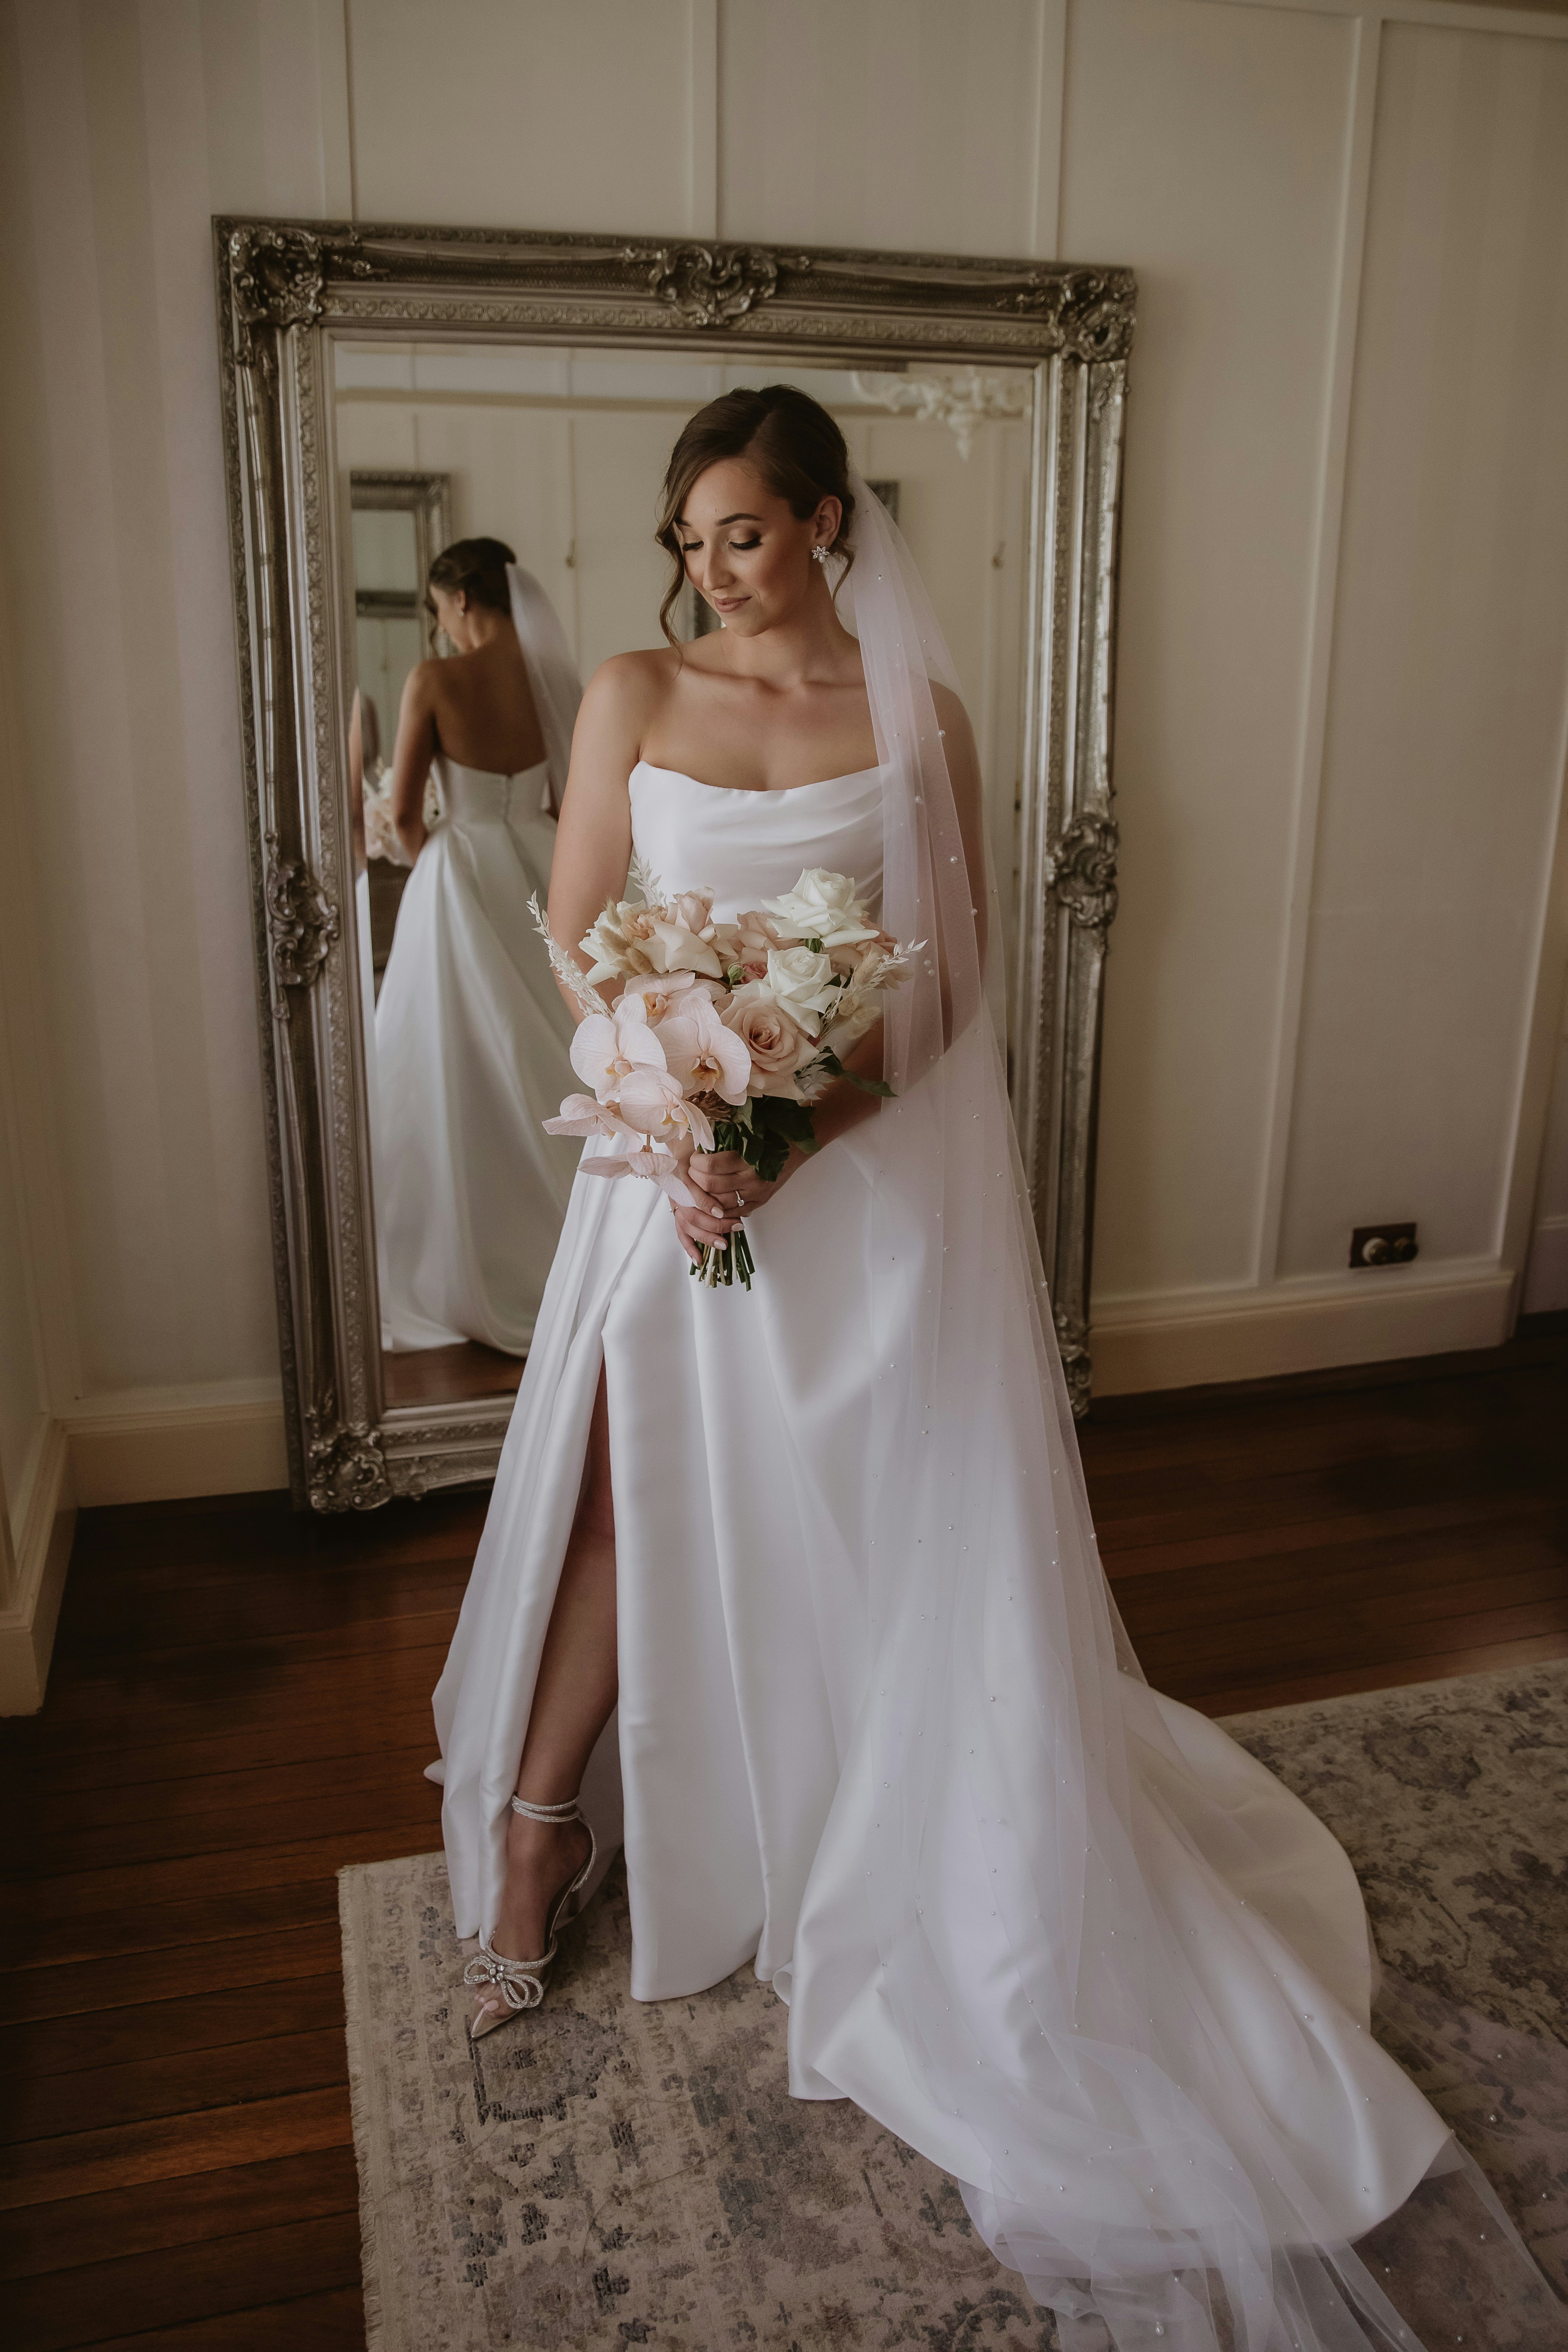 Bride holding bouquet in wedding dress